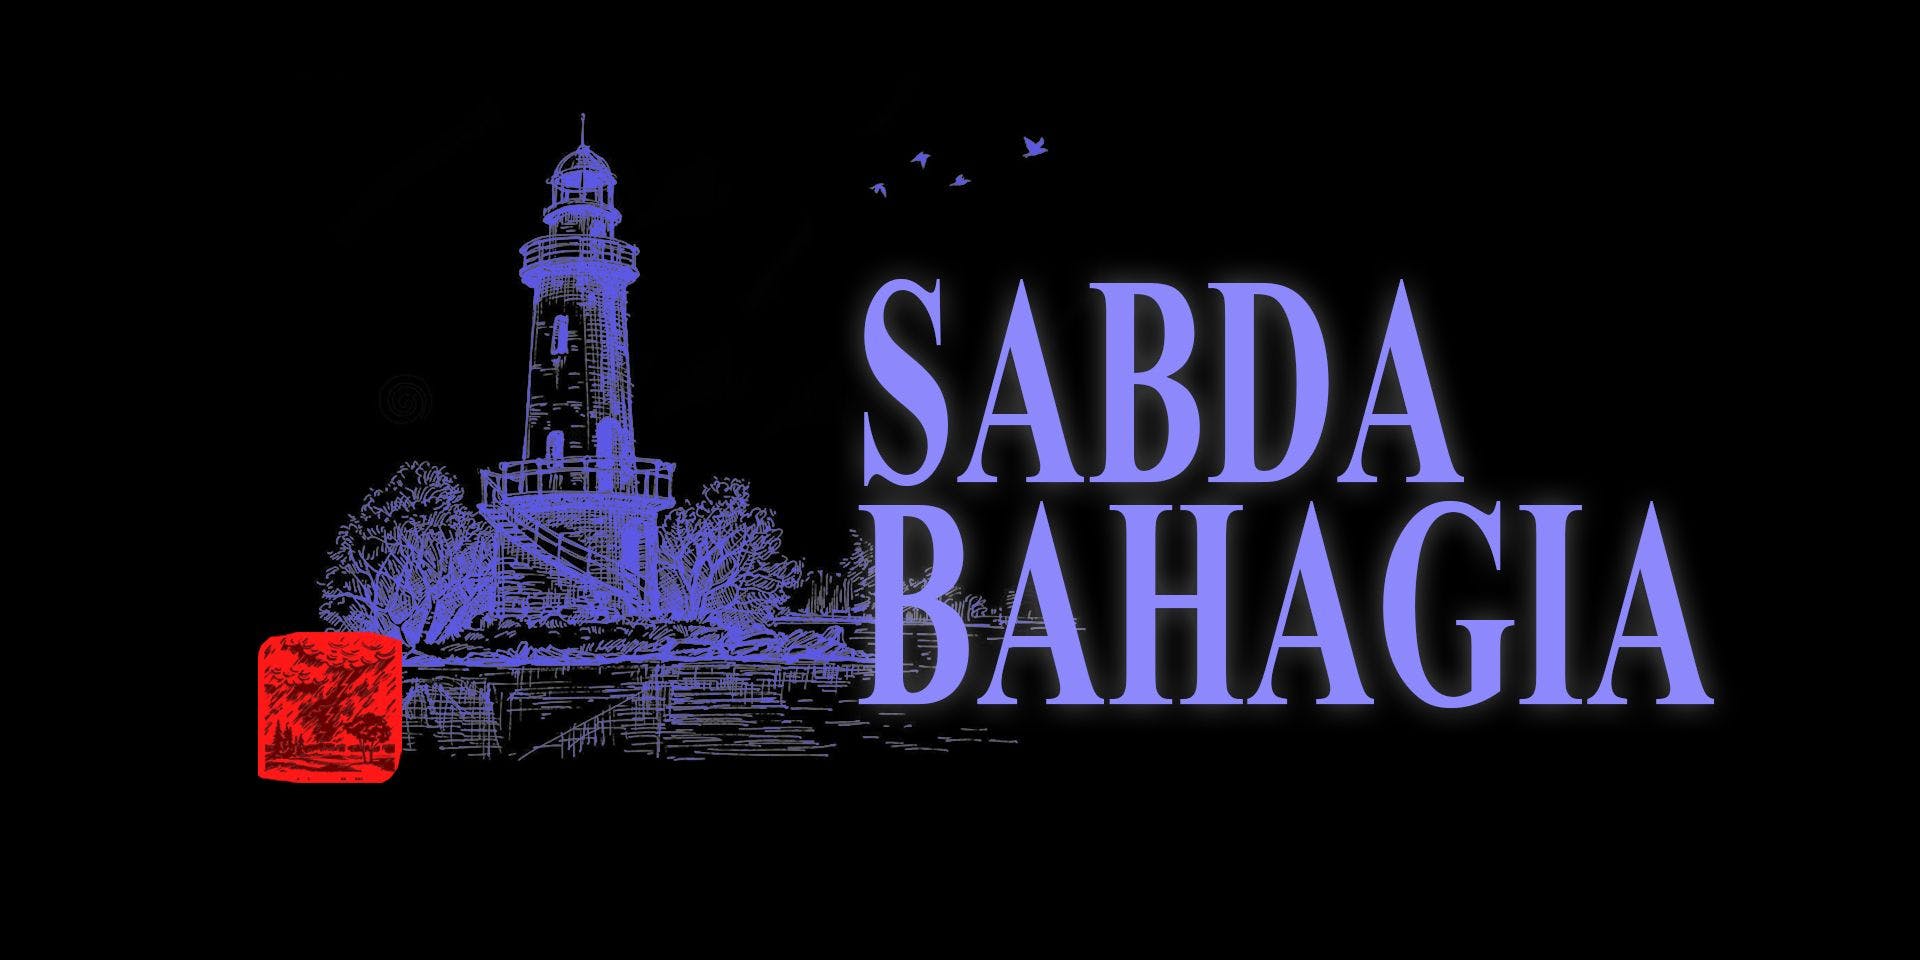 Cover Image for Sabda Bahagia